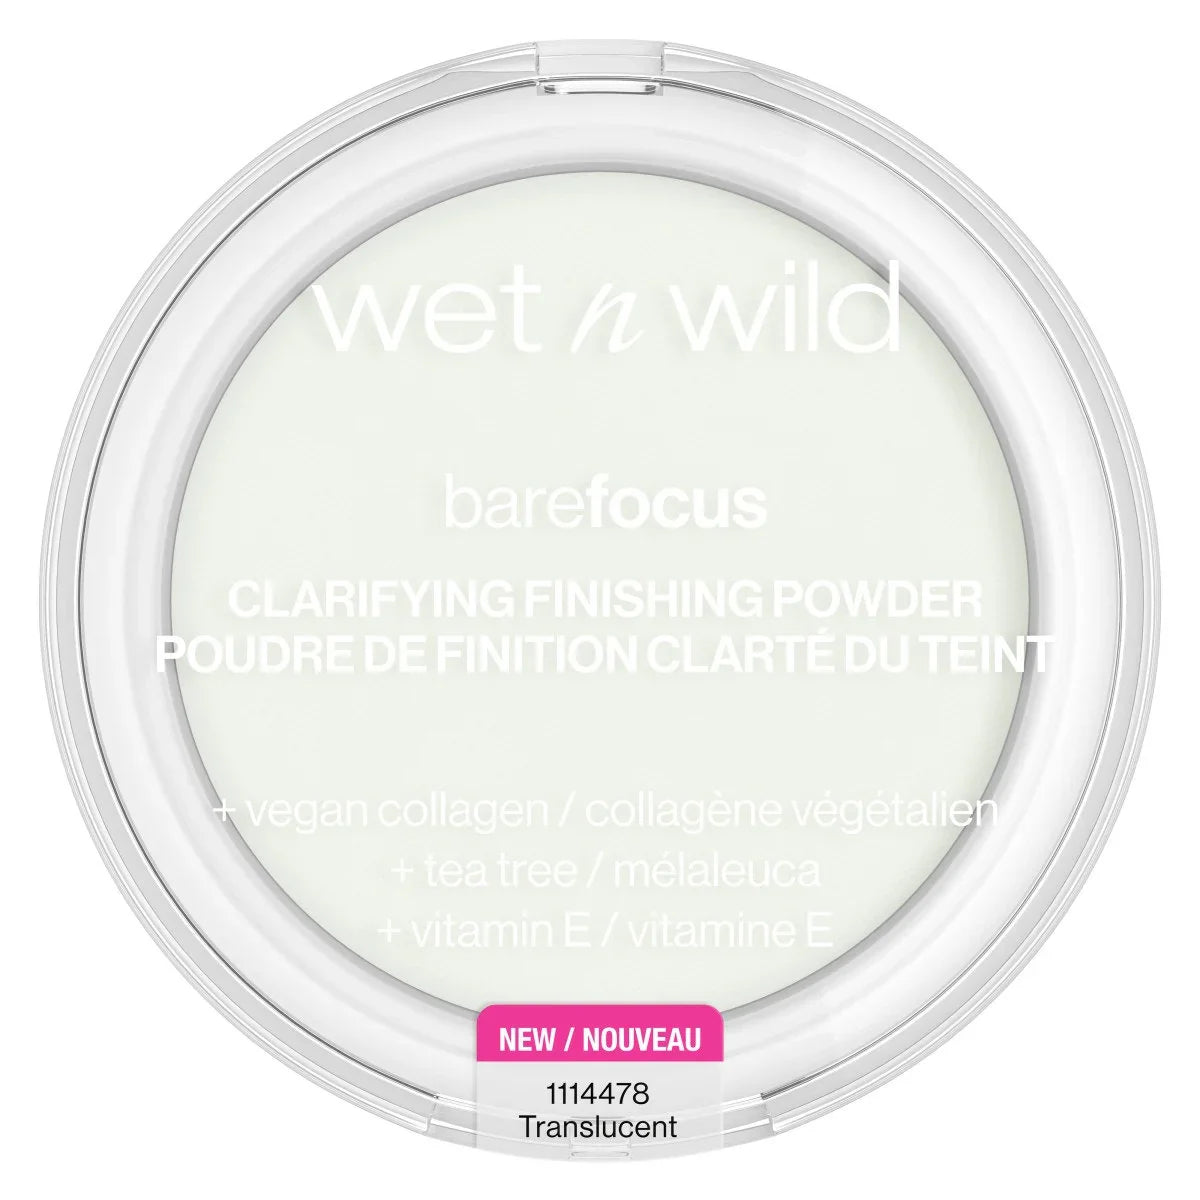 WET N WILD Bare Focus Clarifying Finishing Powder